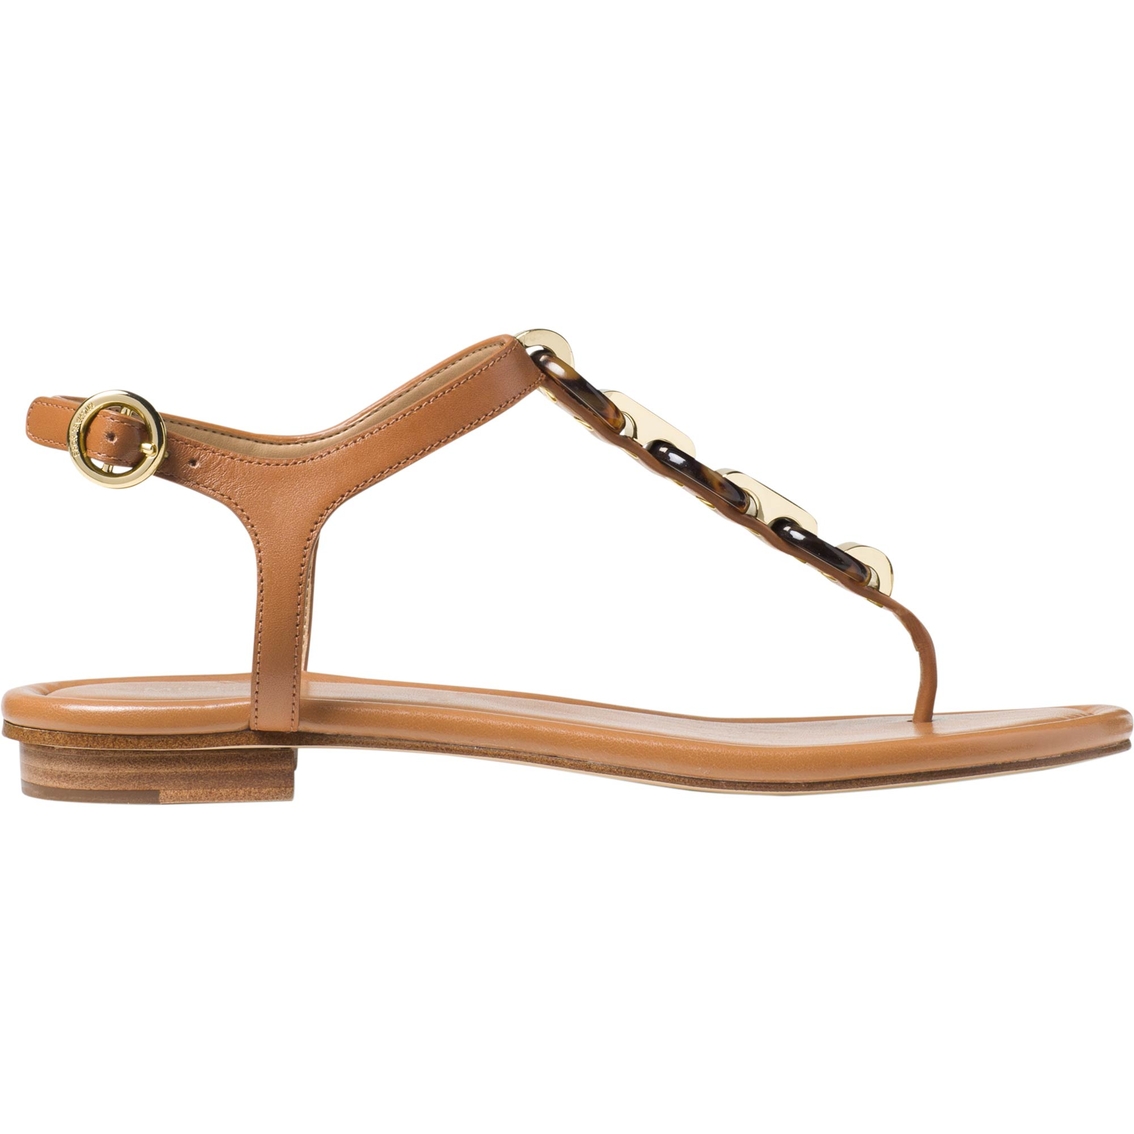 Michael Kors Mahari 3 Ring Thong Sandals | Shoes | Shop The Exchange